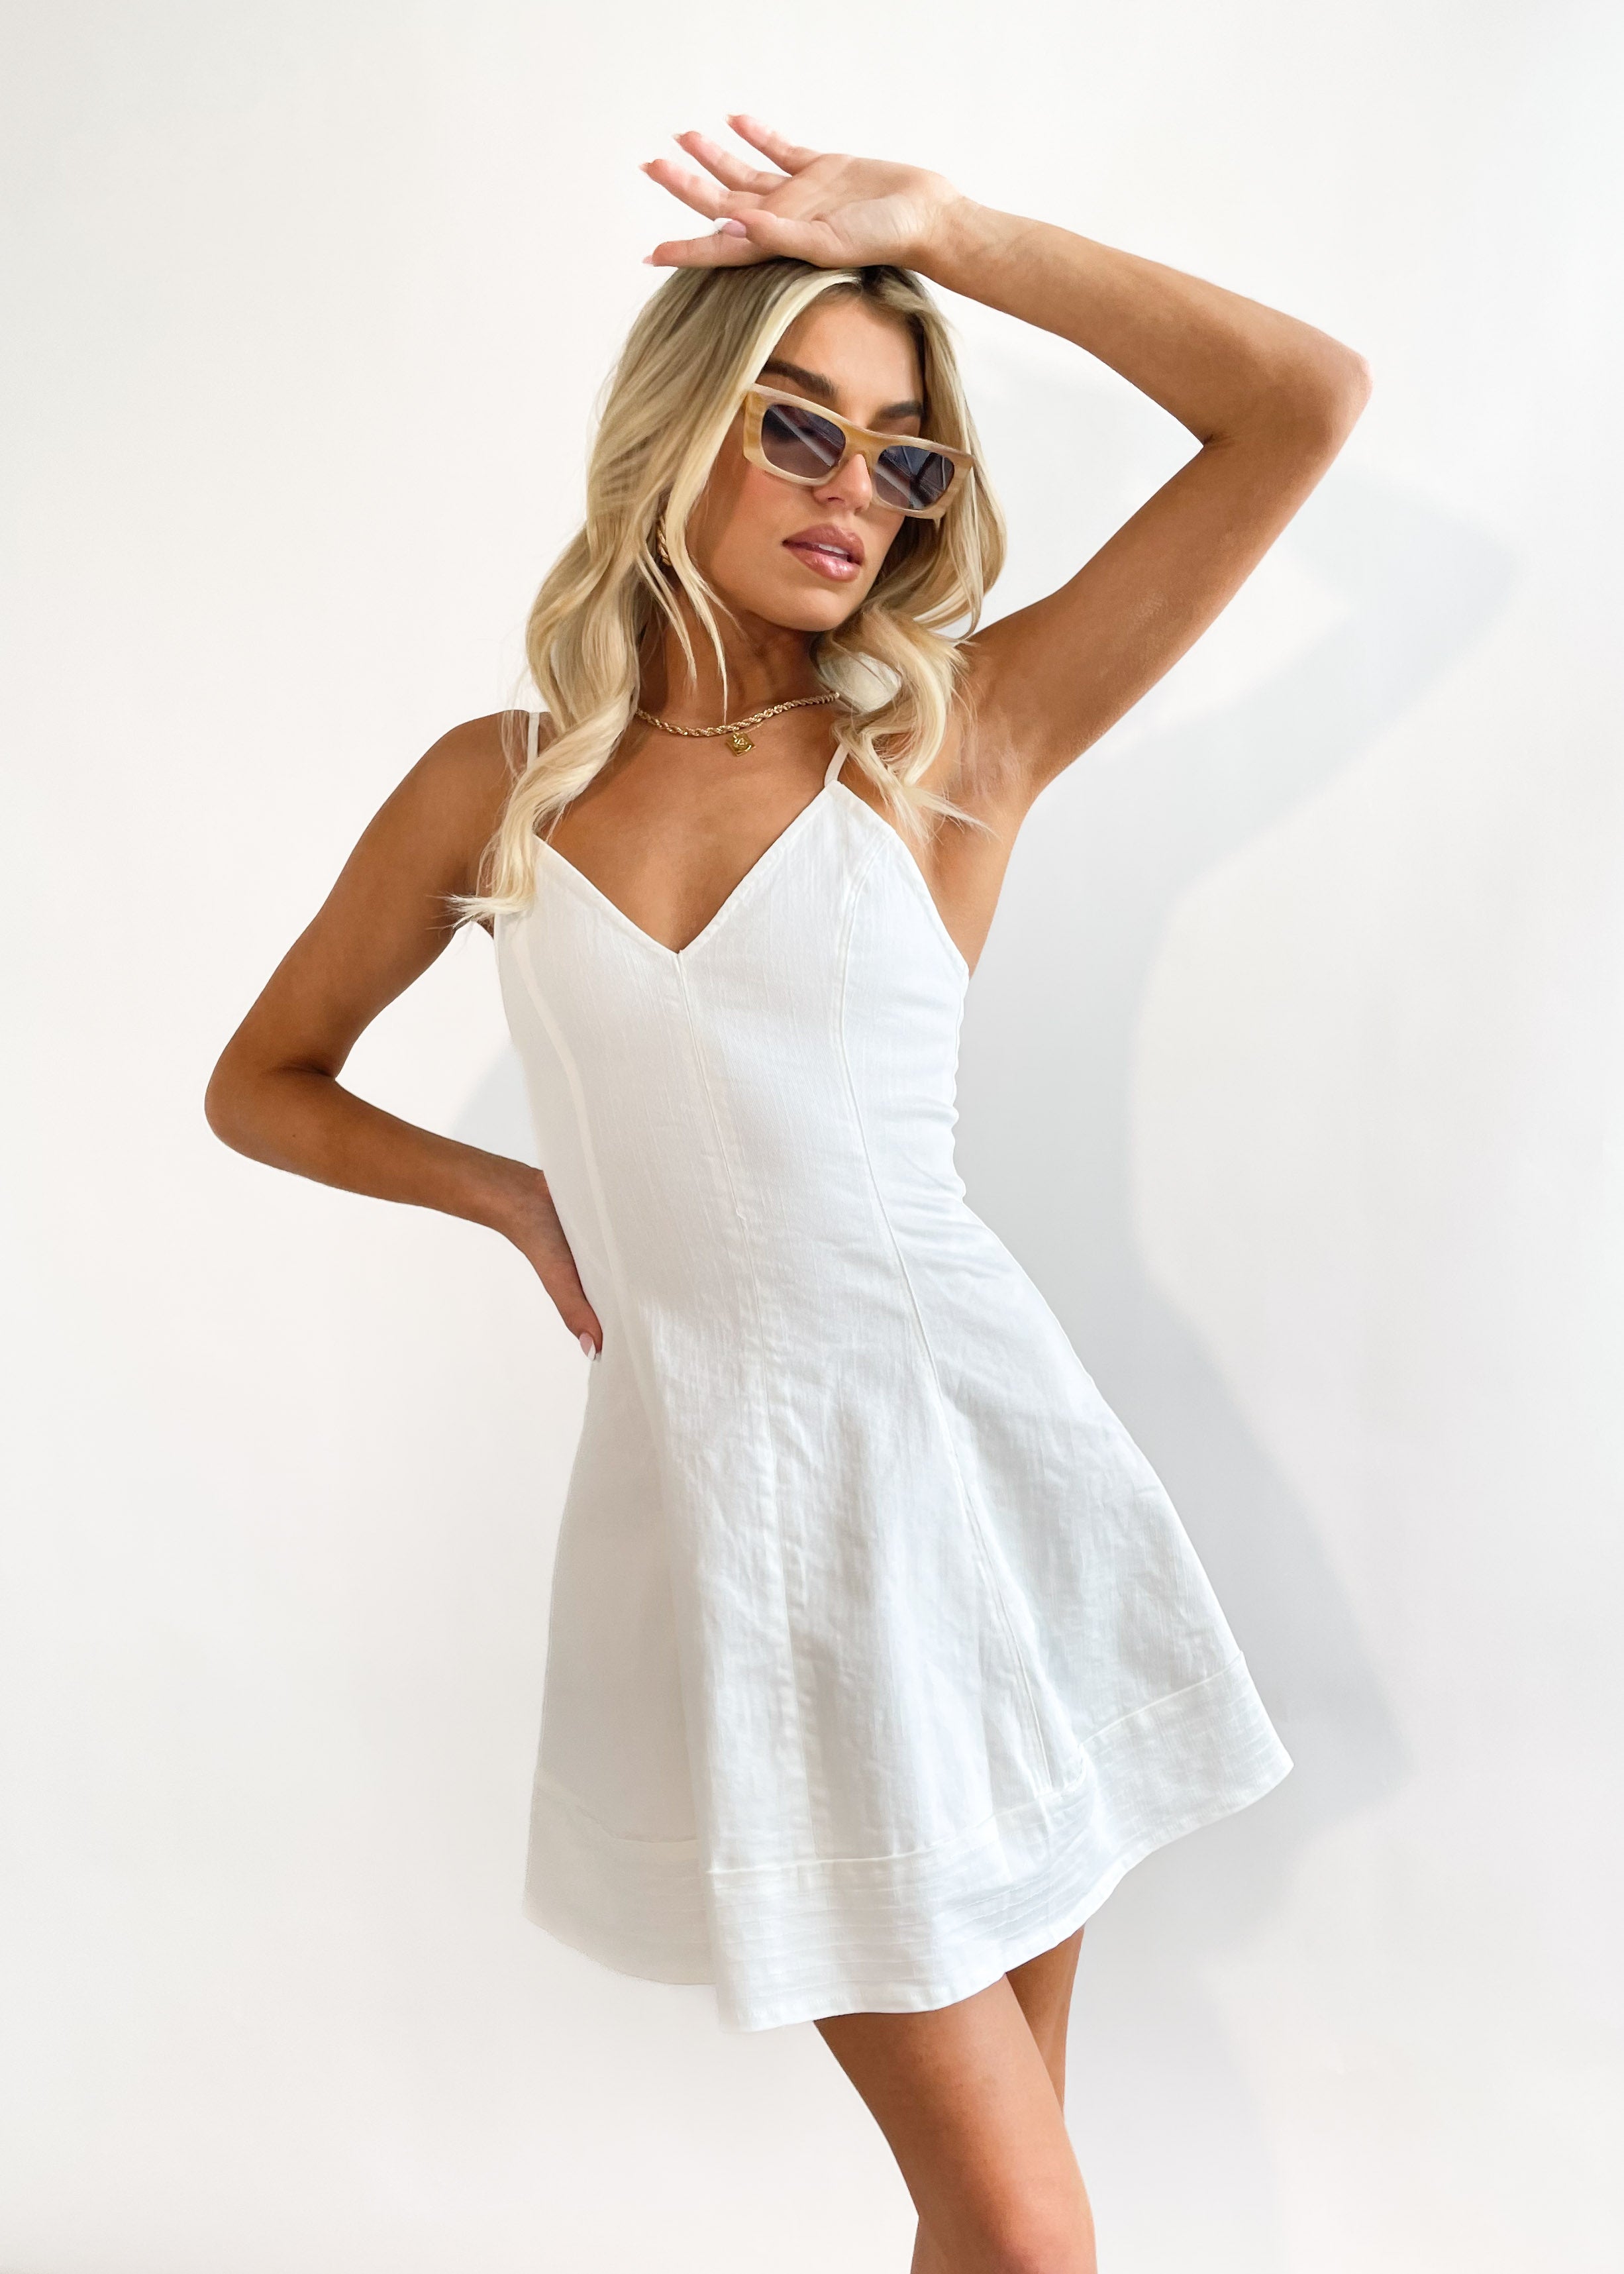 Luellah Dress - White Denim